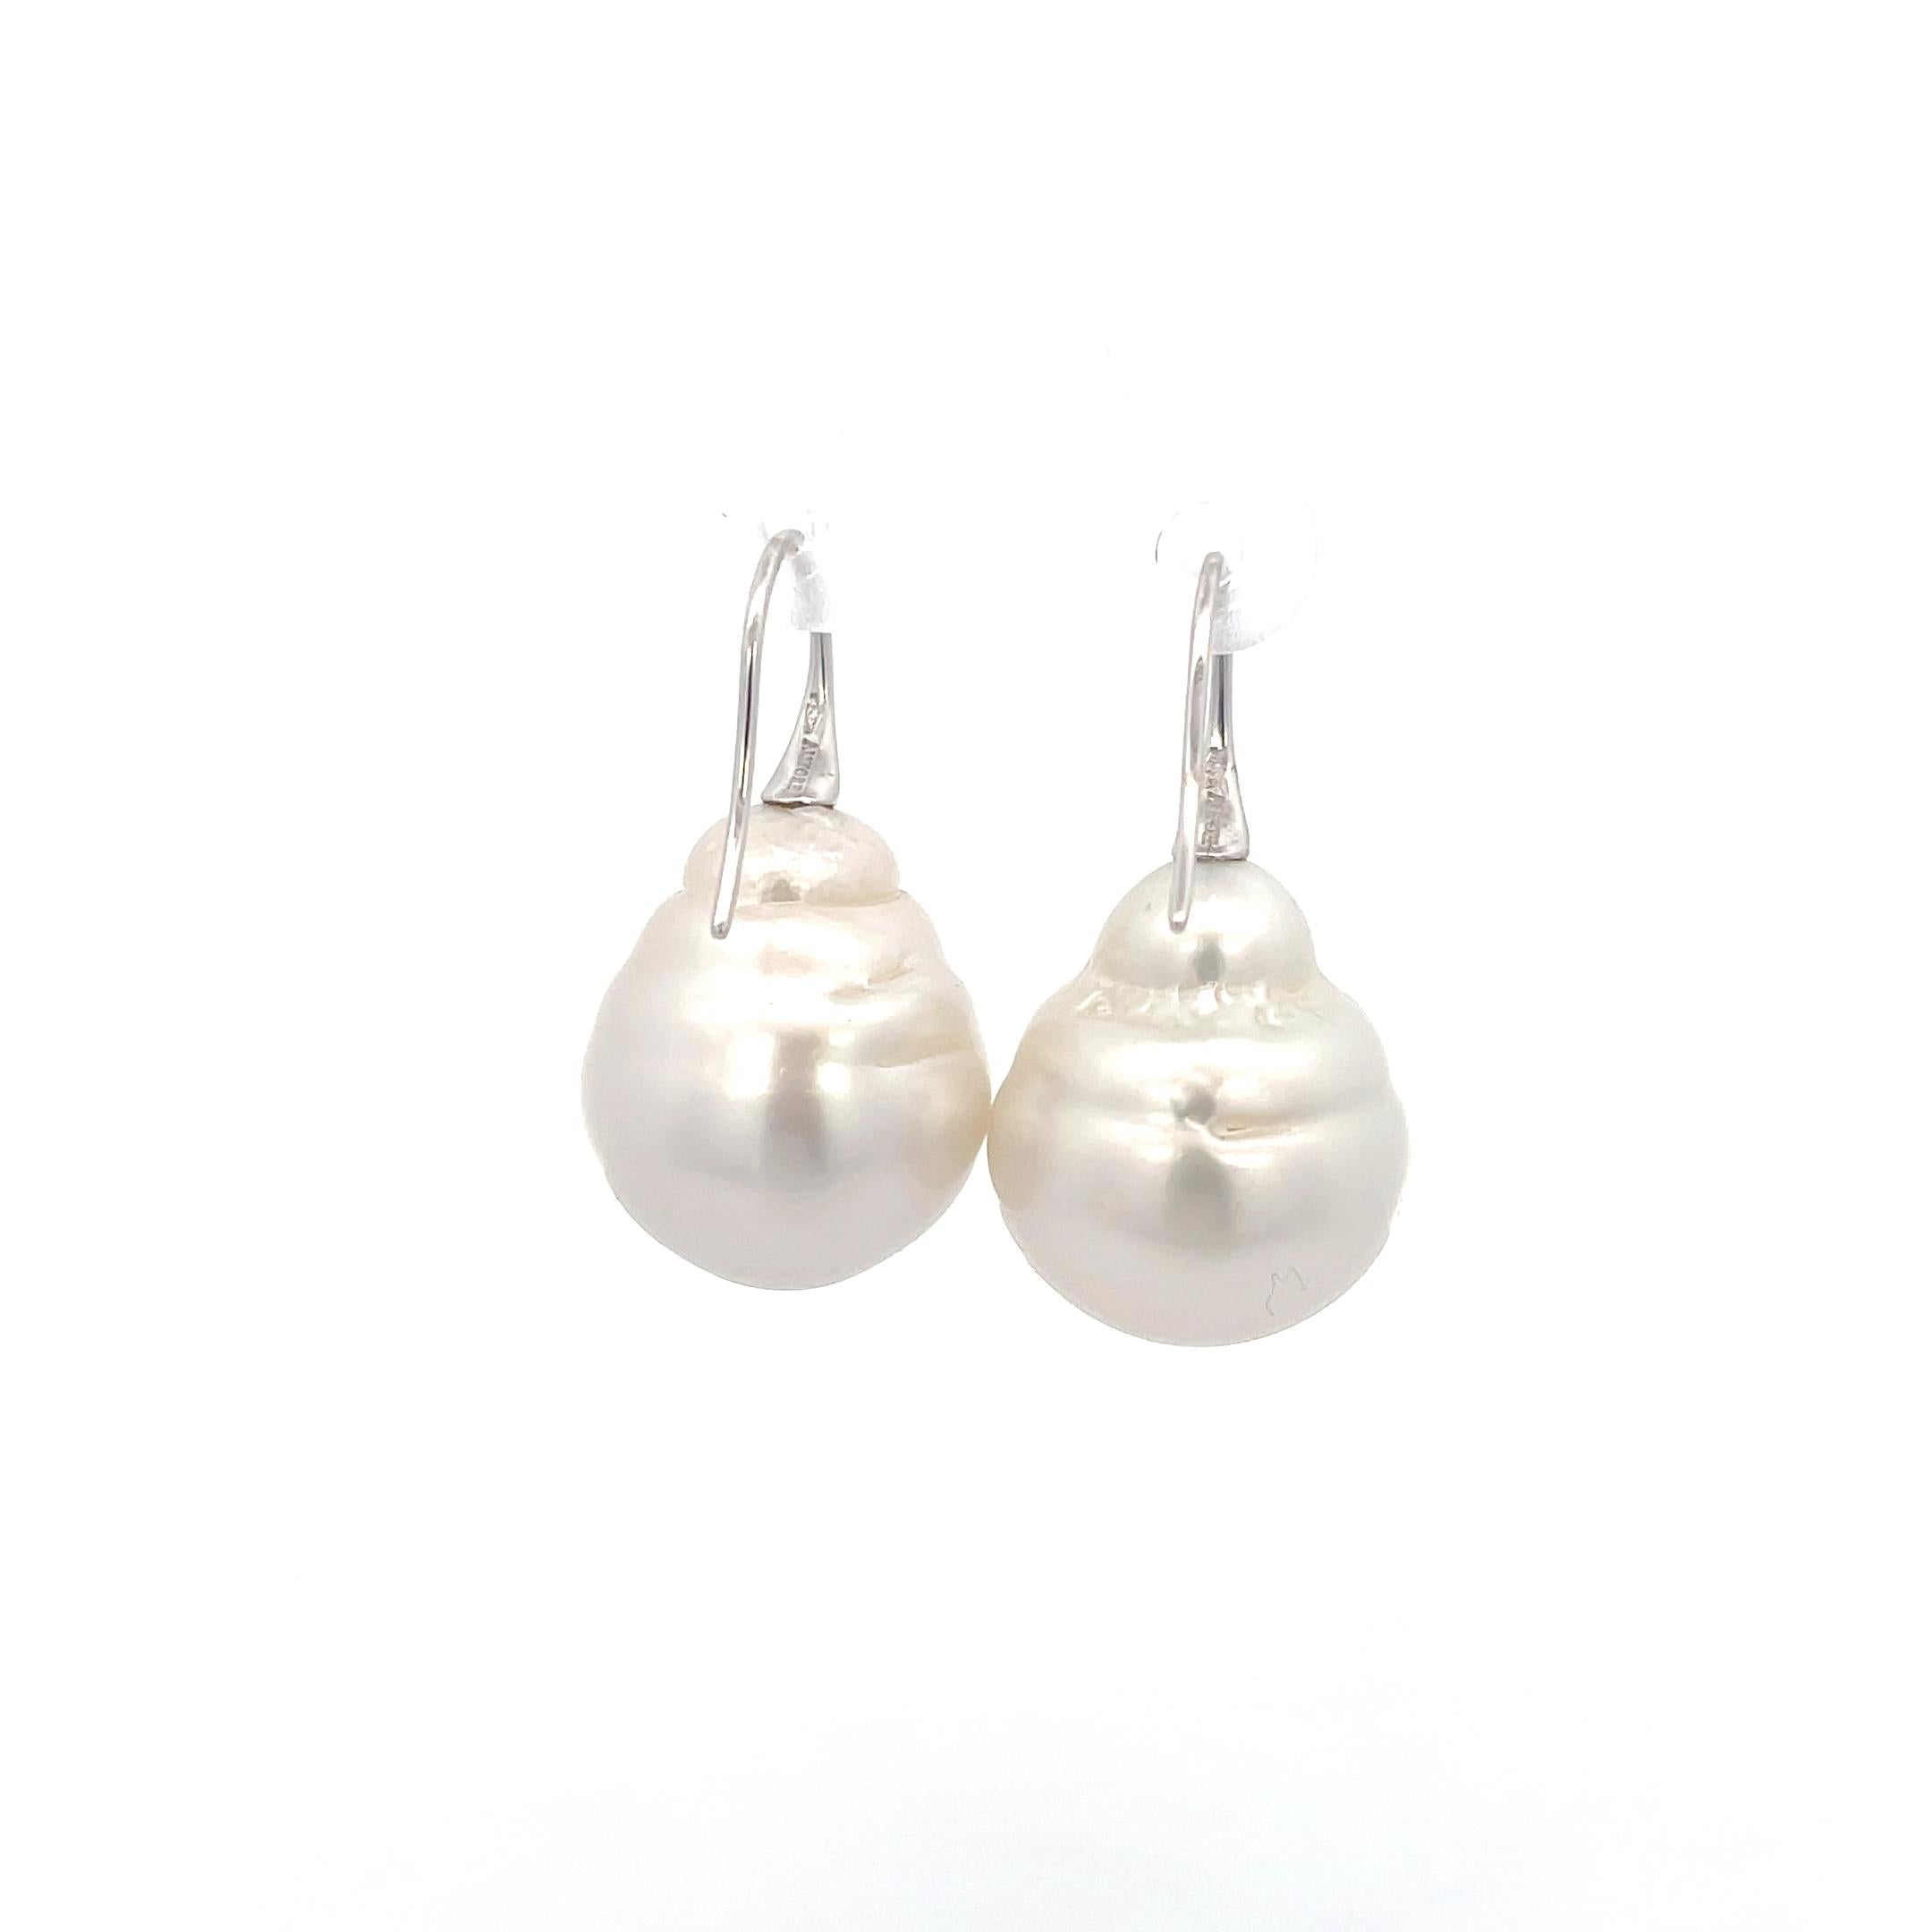 Uncut Autore Baroque South Sea Pearls 18K White Gold For Sale